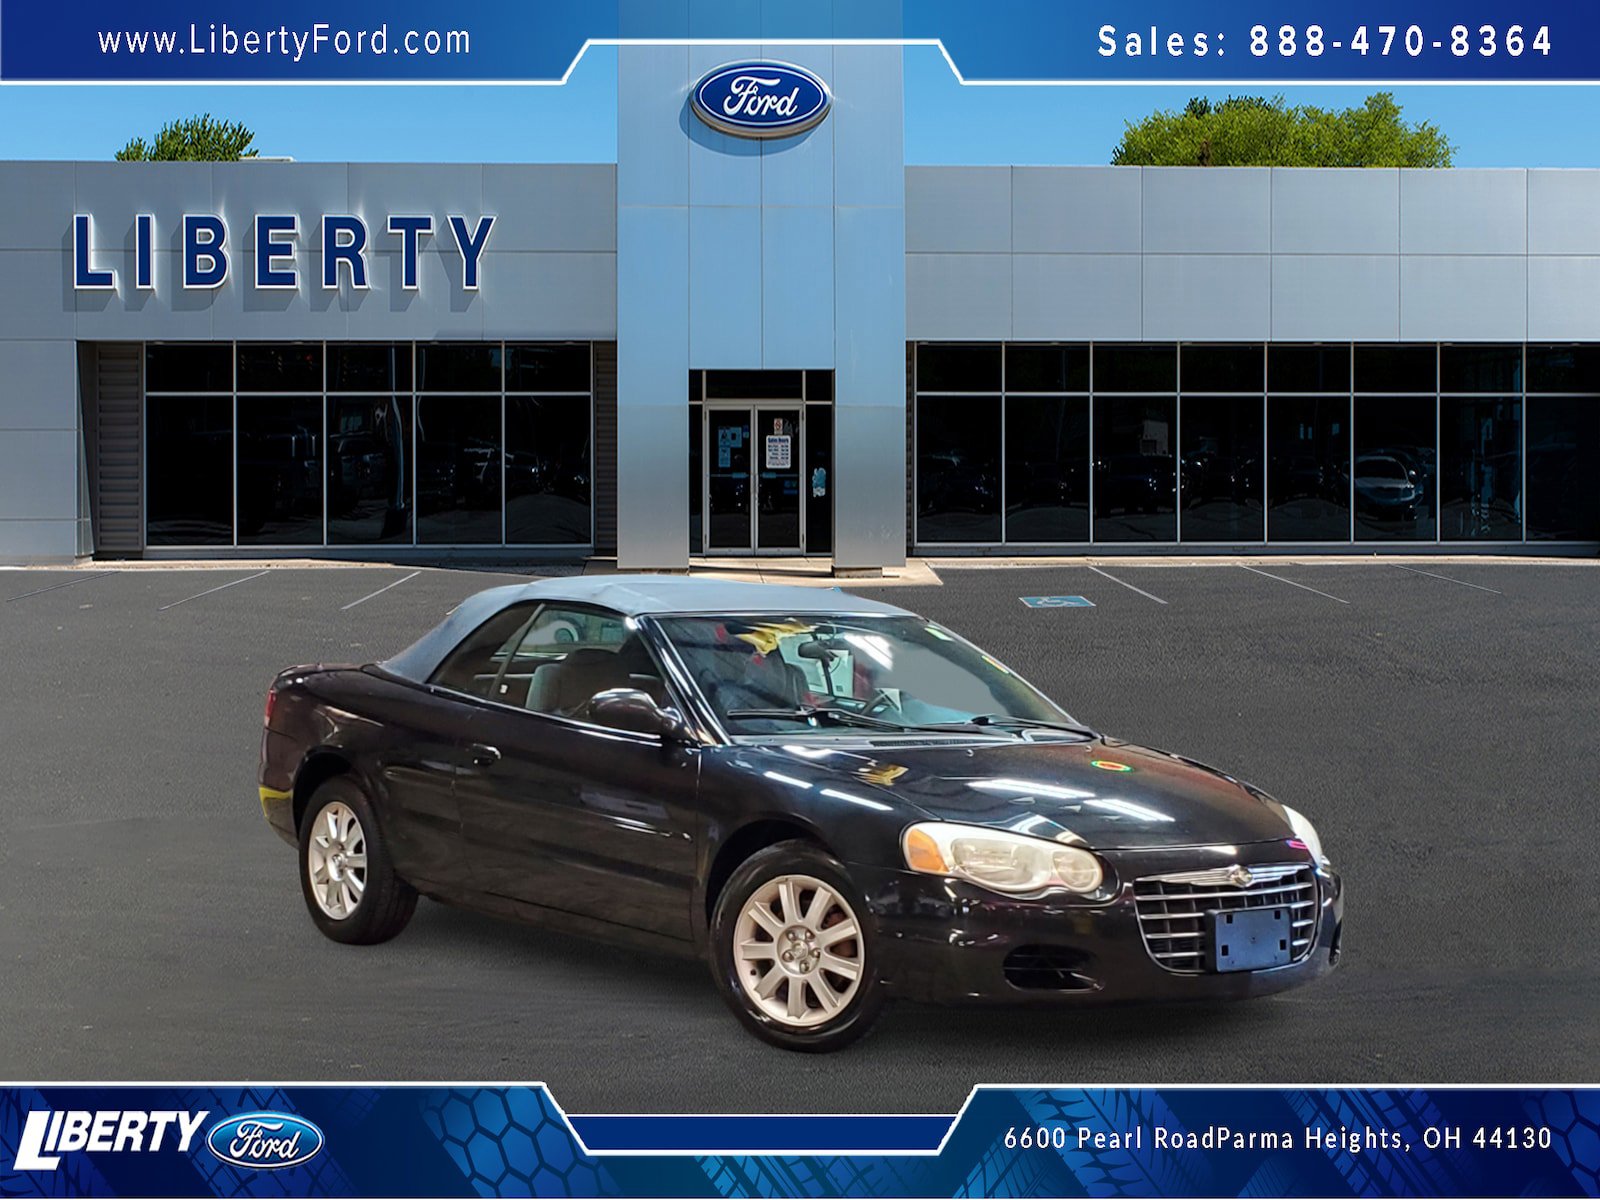 Used Chrysler Sebring for Sale Near Me in Cleveland, OH - Autotrader